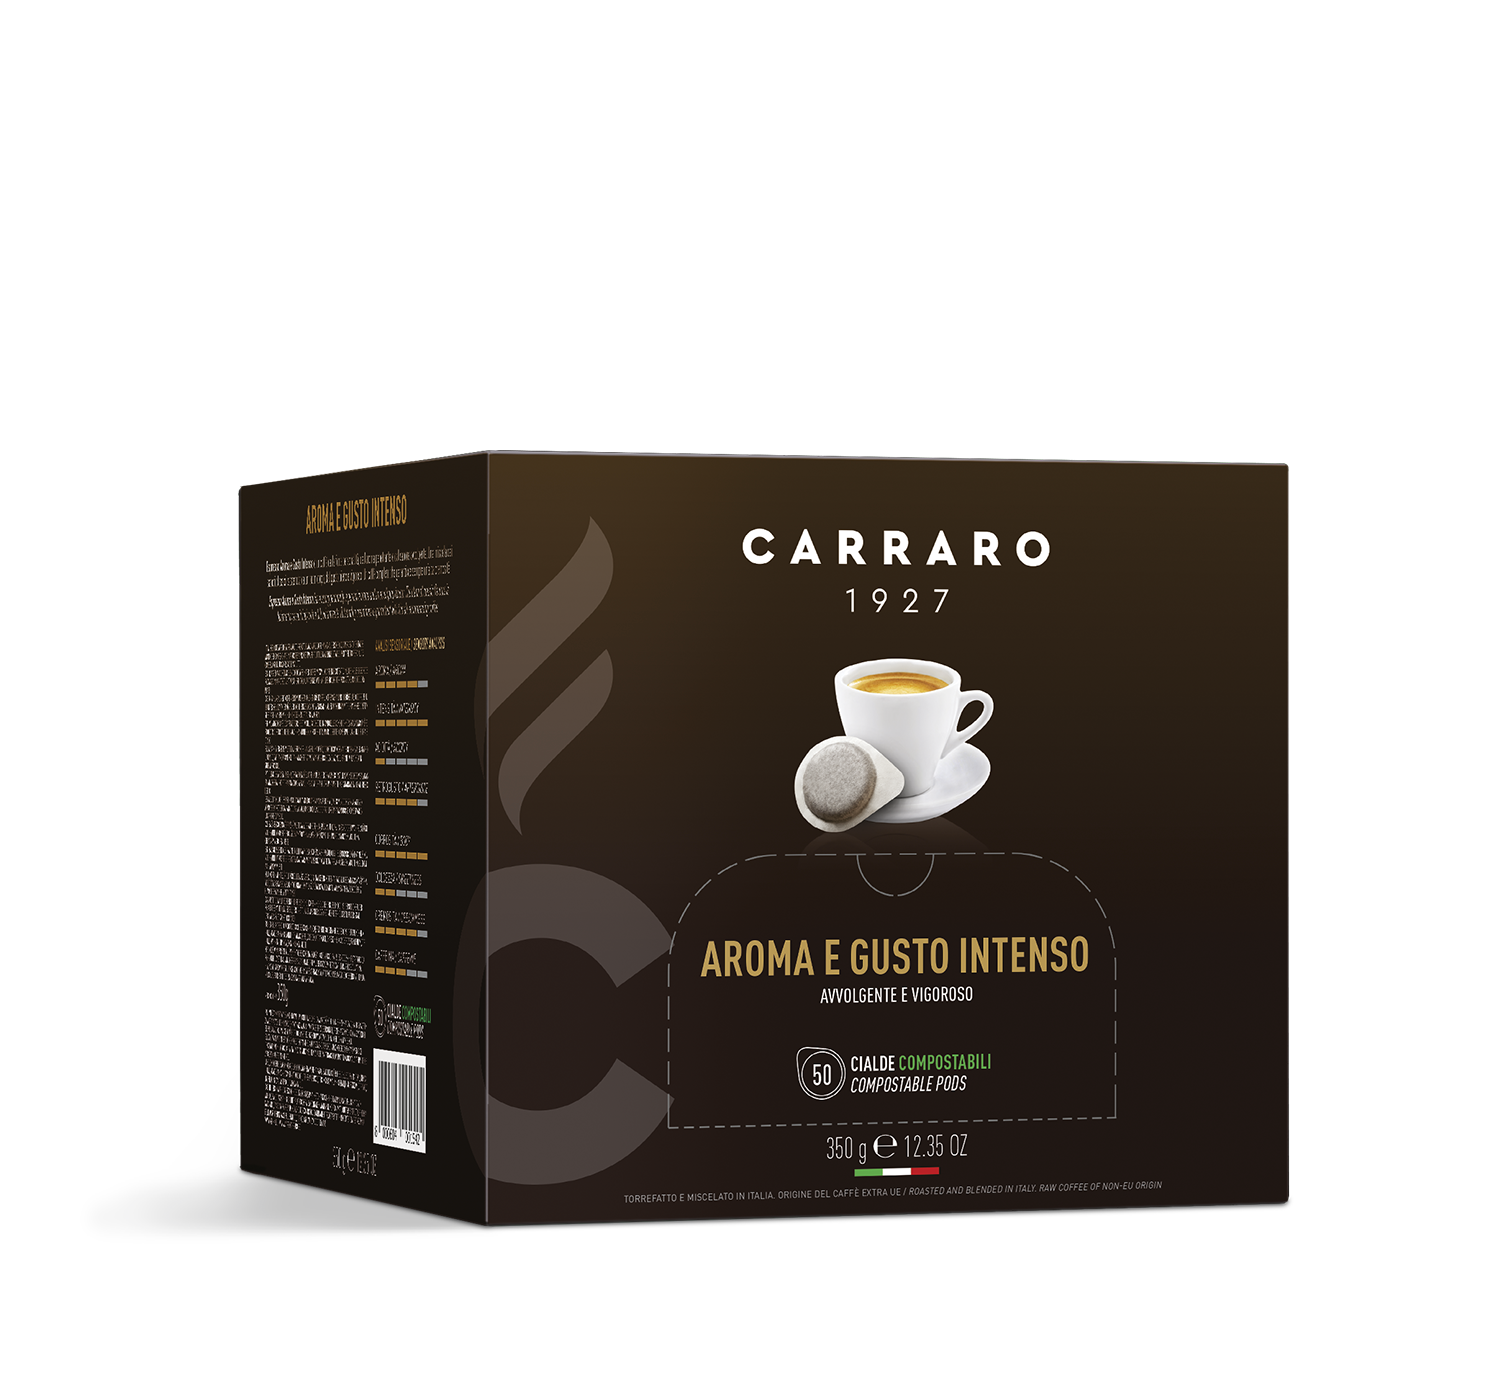 Retail - Espresso aroma e gusto intenso – 50 pods 7 g - Shop online Caffè Carraro